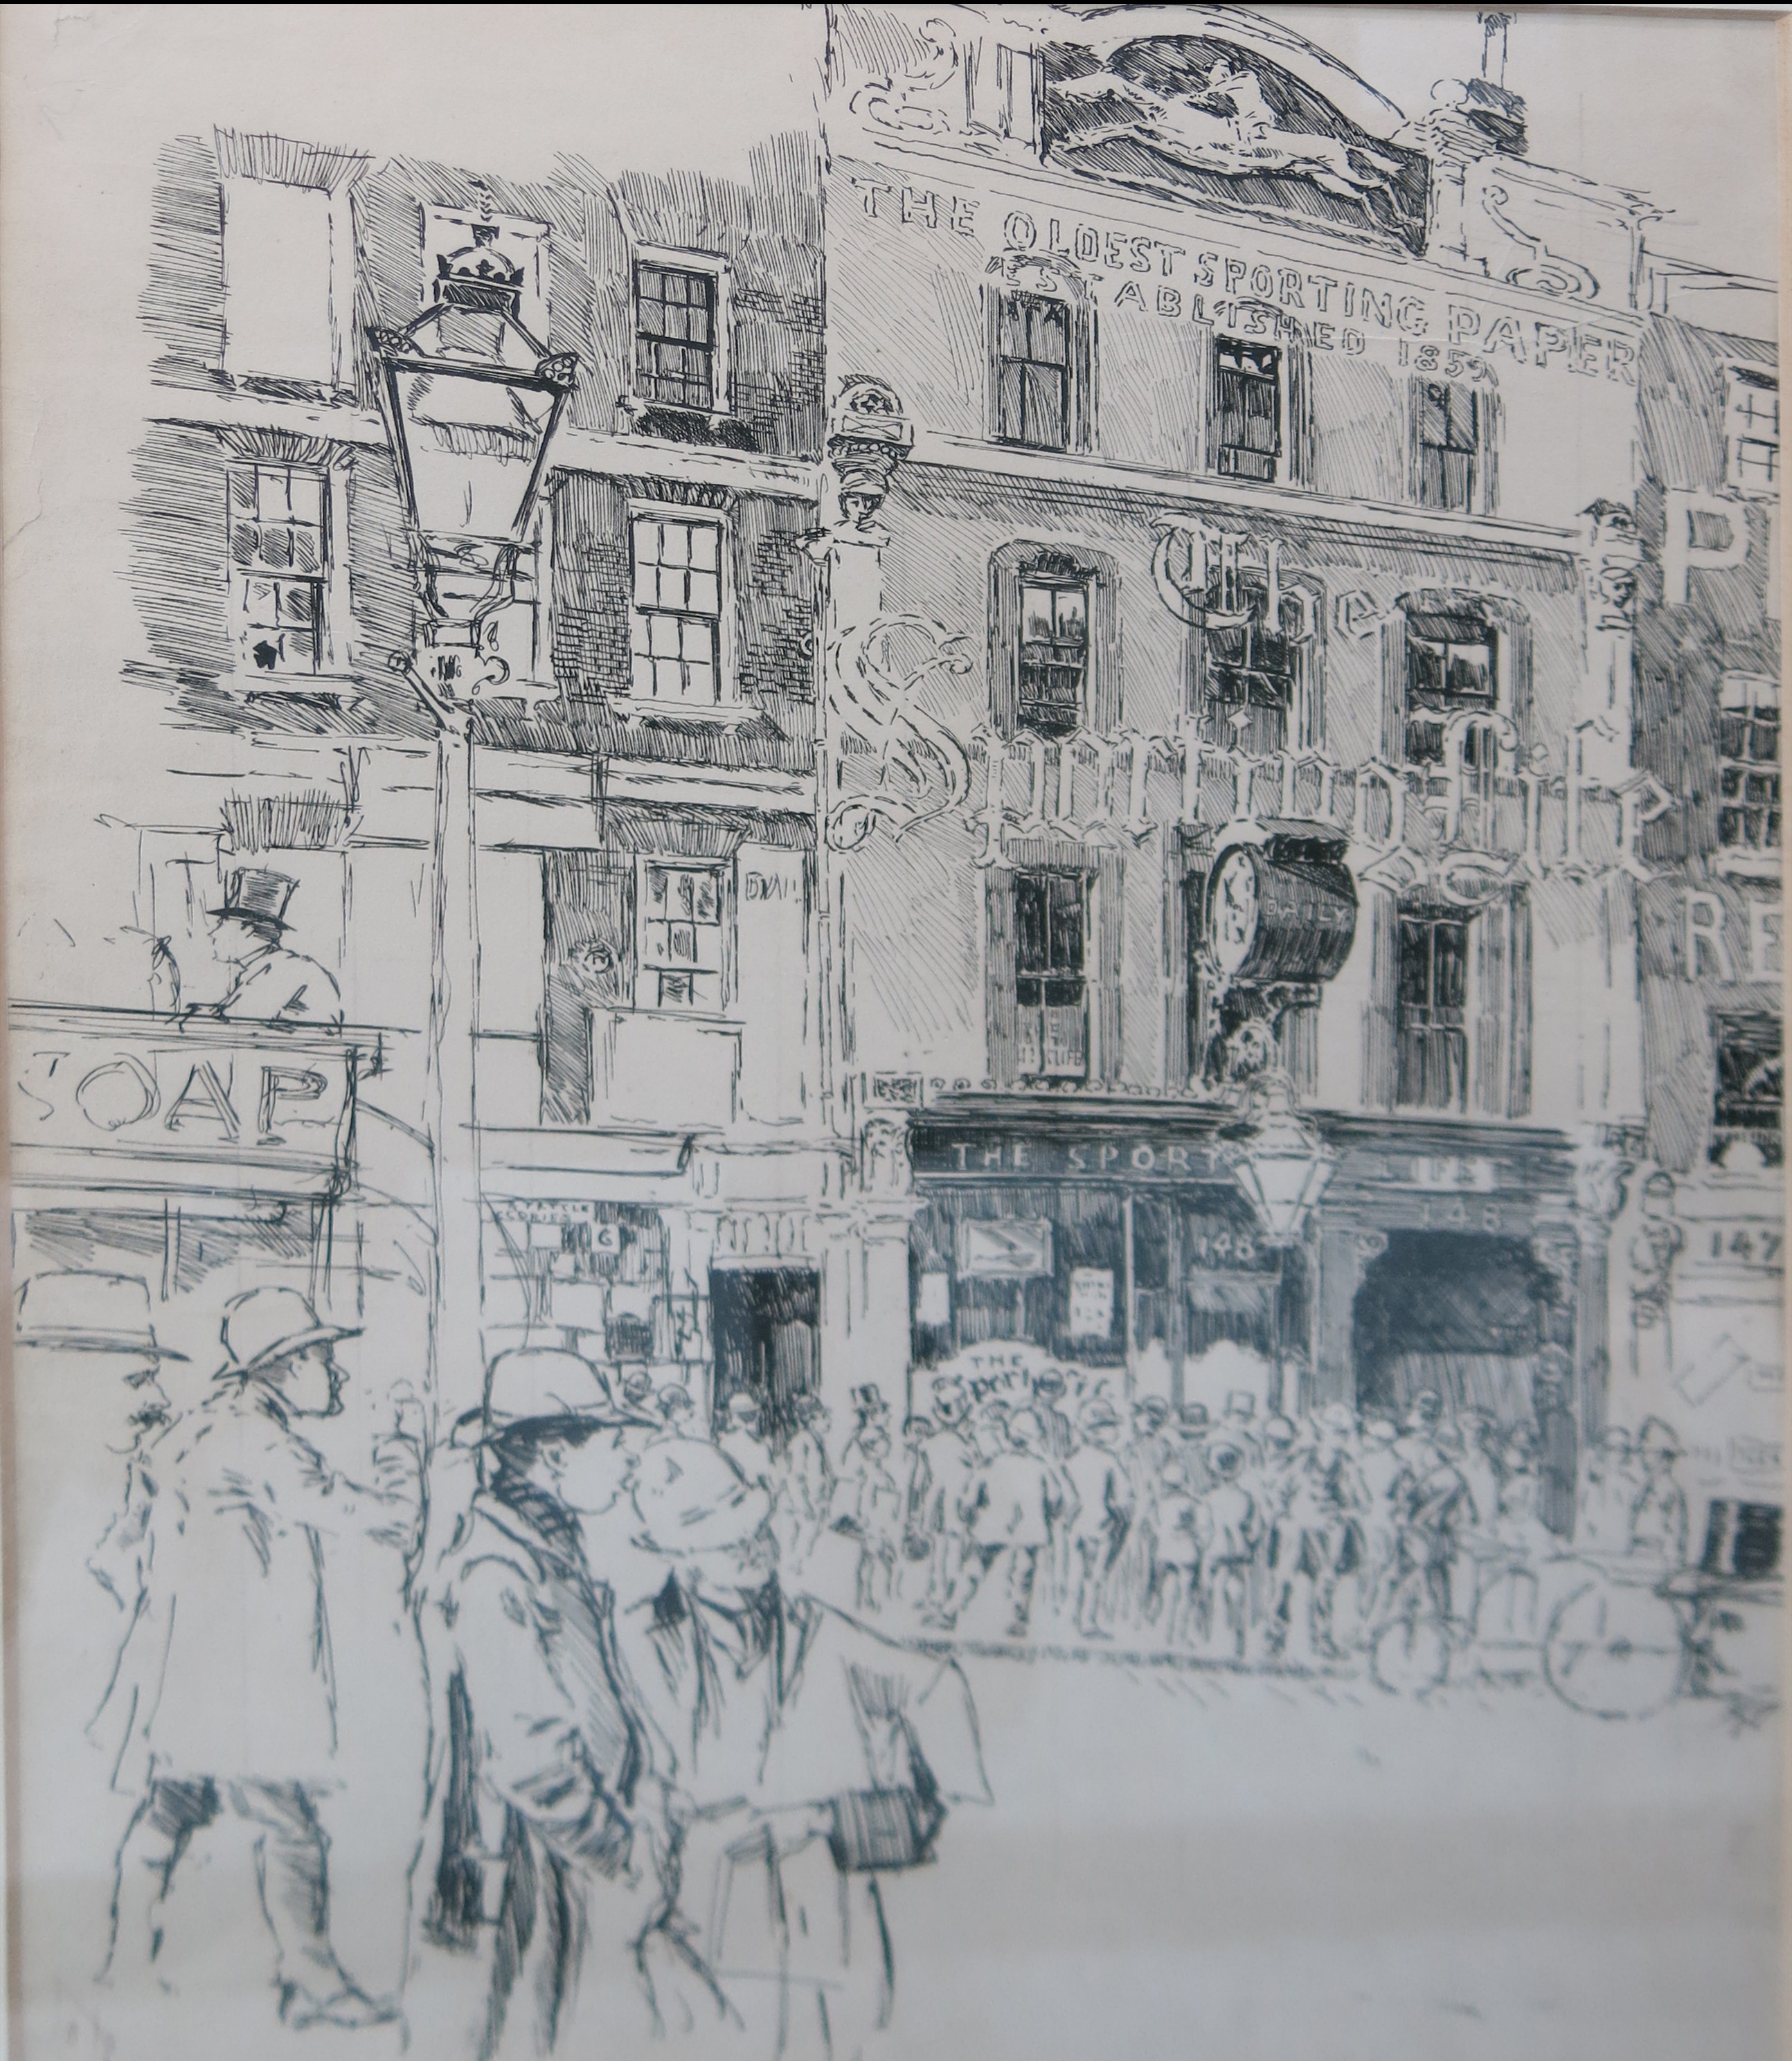 Joseph PENNELL (1858/60-1926) The Sporting Life Building, 148 Fleet Street